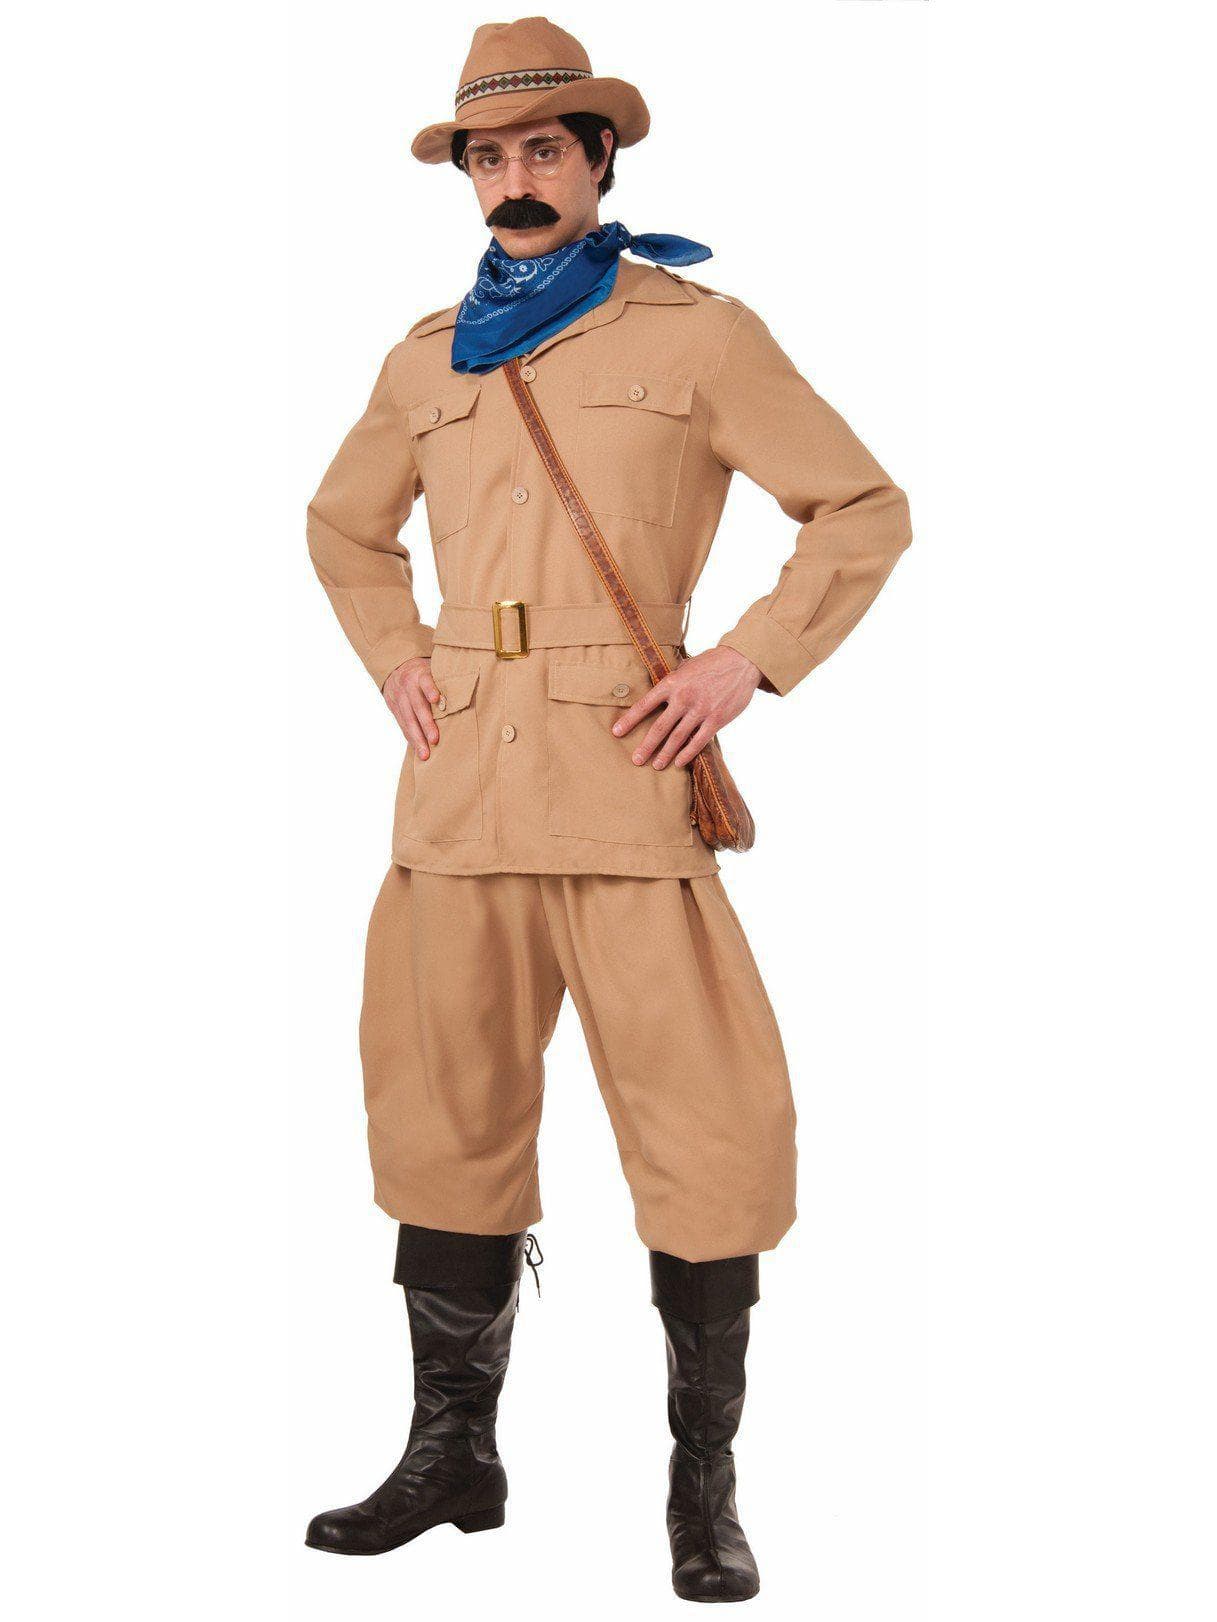 Adult Theodore Roosevelt Costume - costumes.com